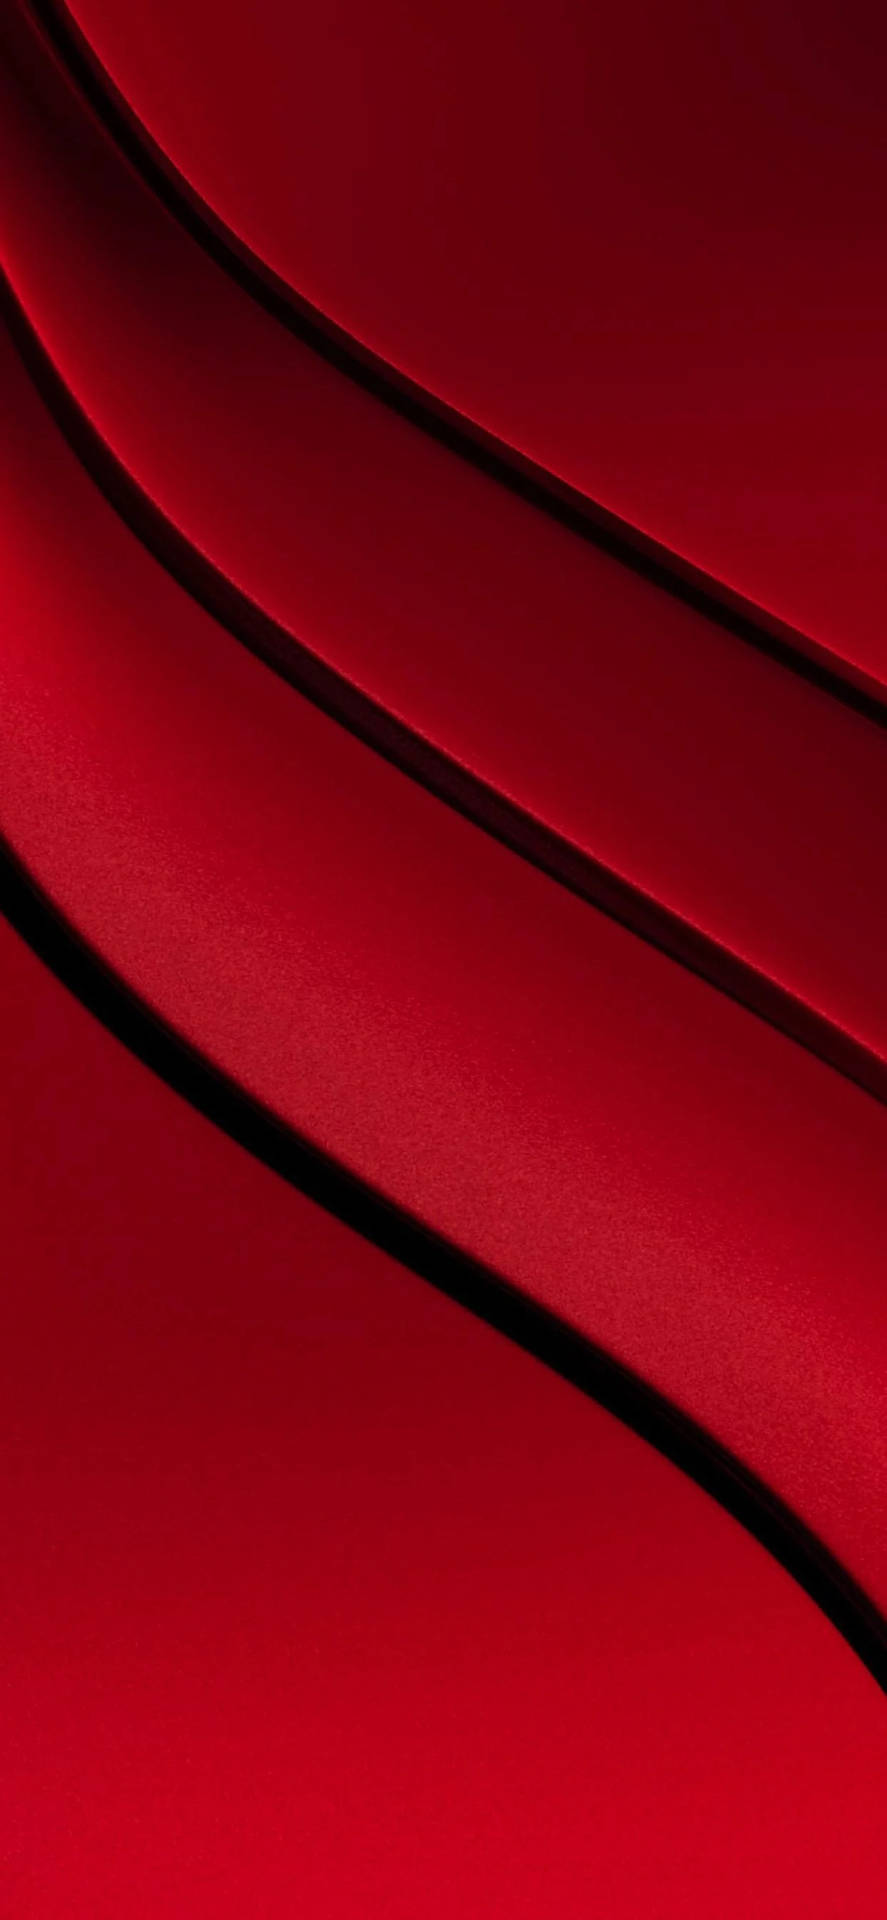 Metallic Red Iphone Background